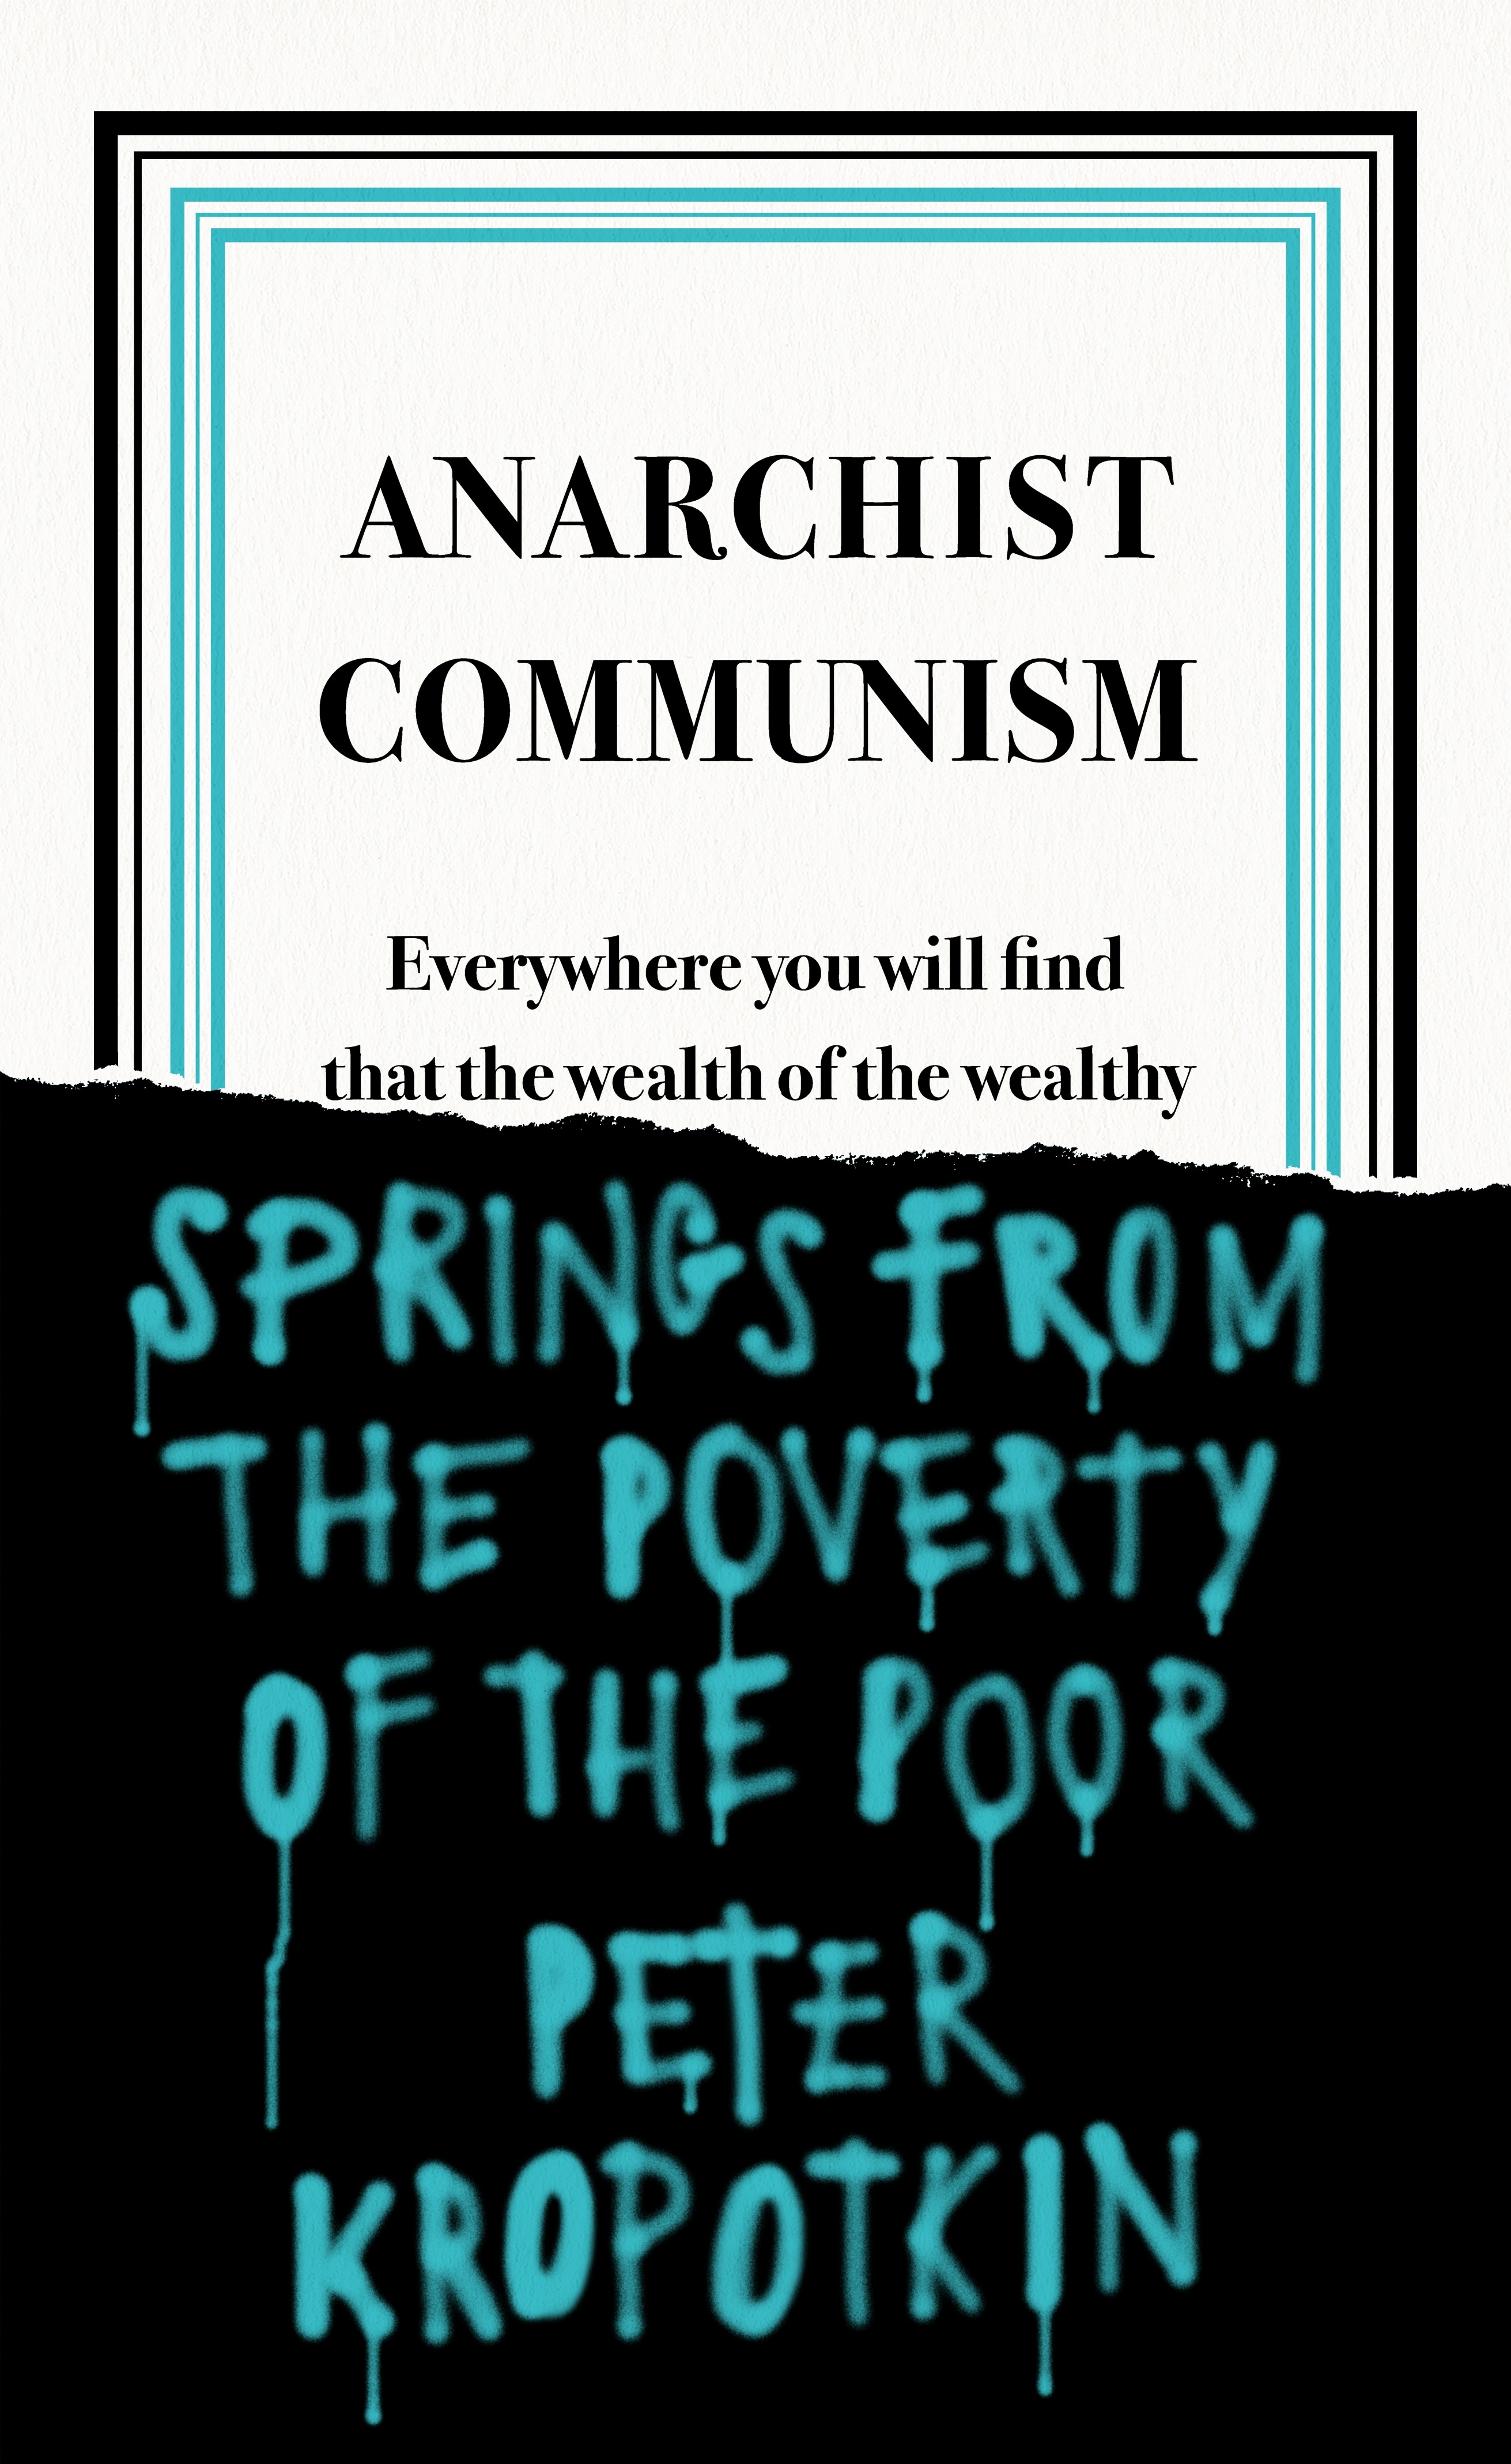 Book “Anarchist Communism” by Peter Kropotkin — September 24, 2020